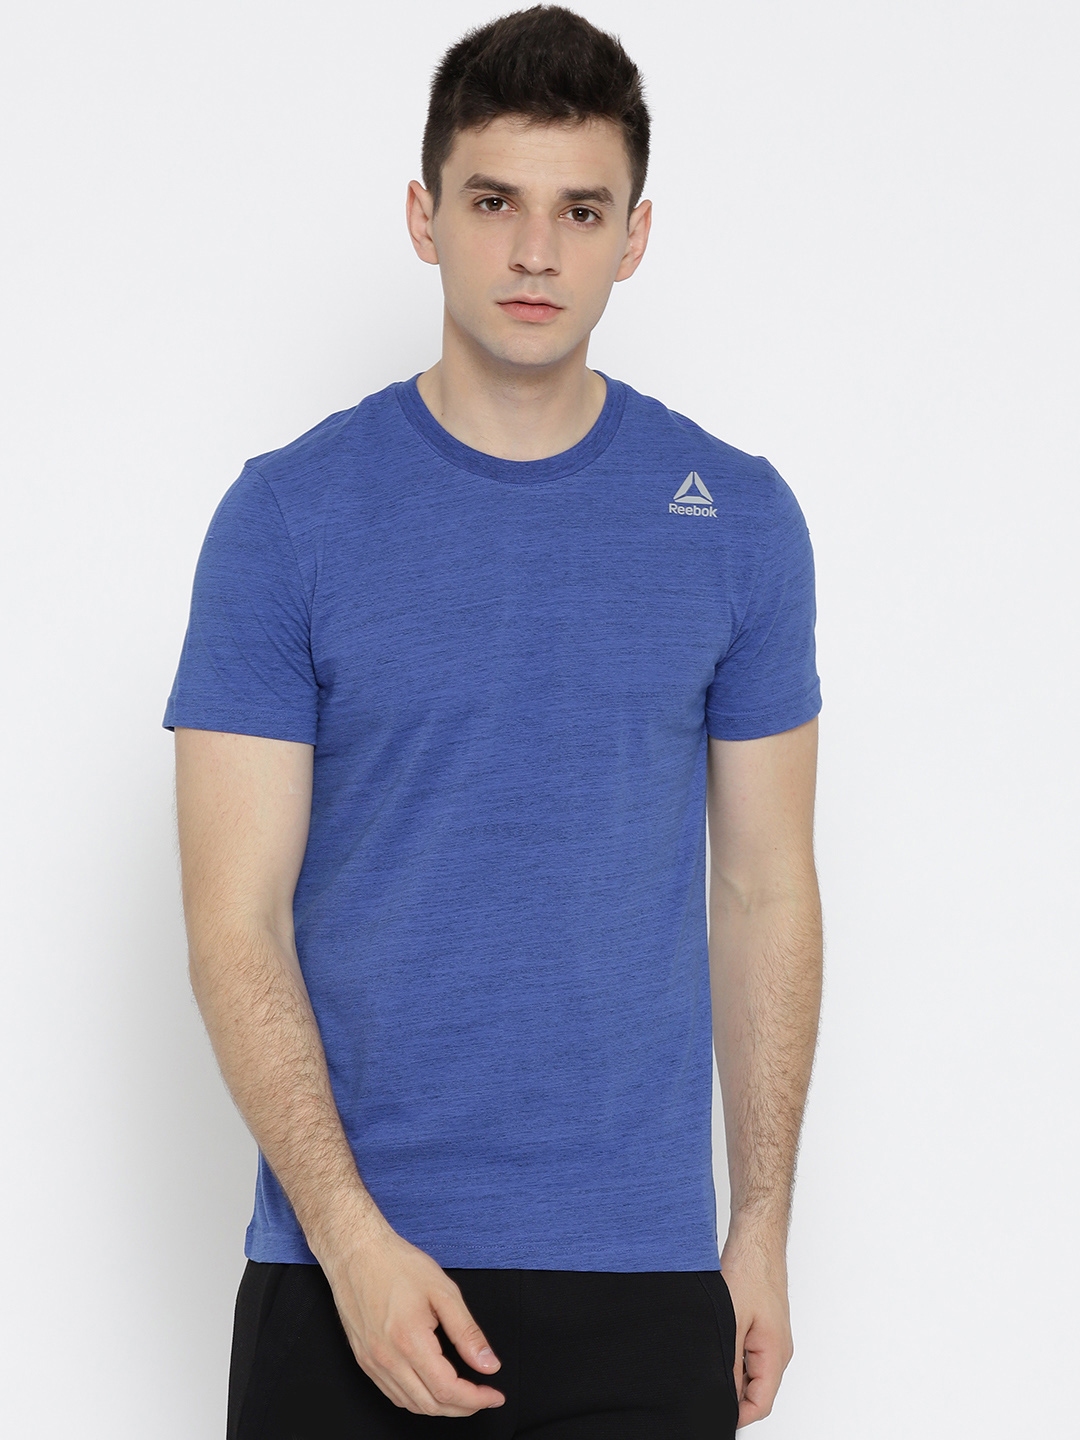 Buy Elements T Shirt - Tshirts for Men 4454872 | Myntra